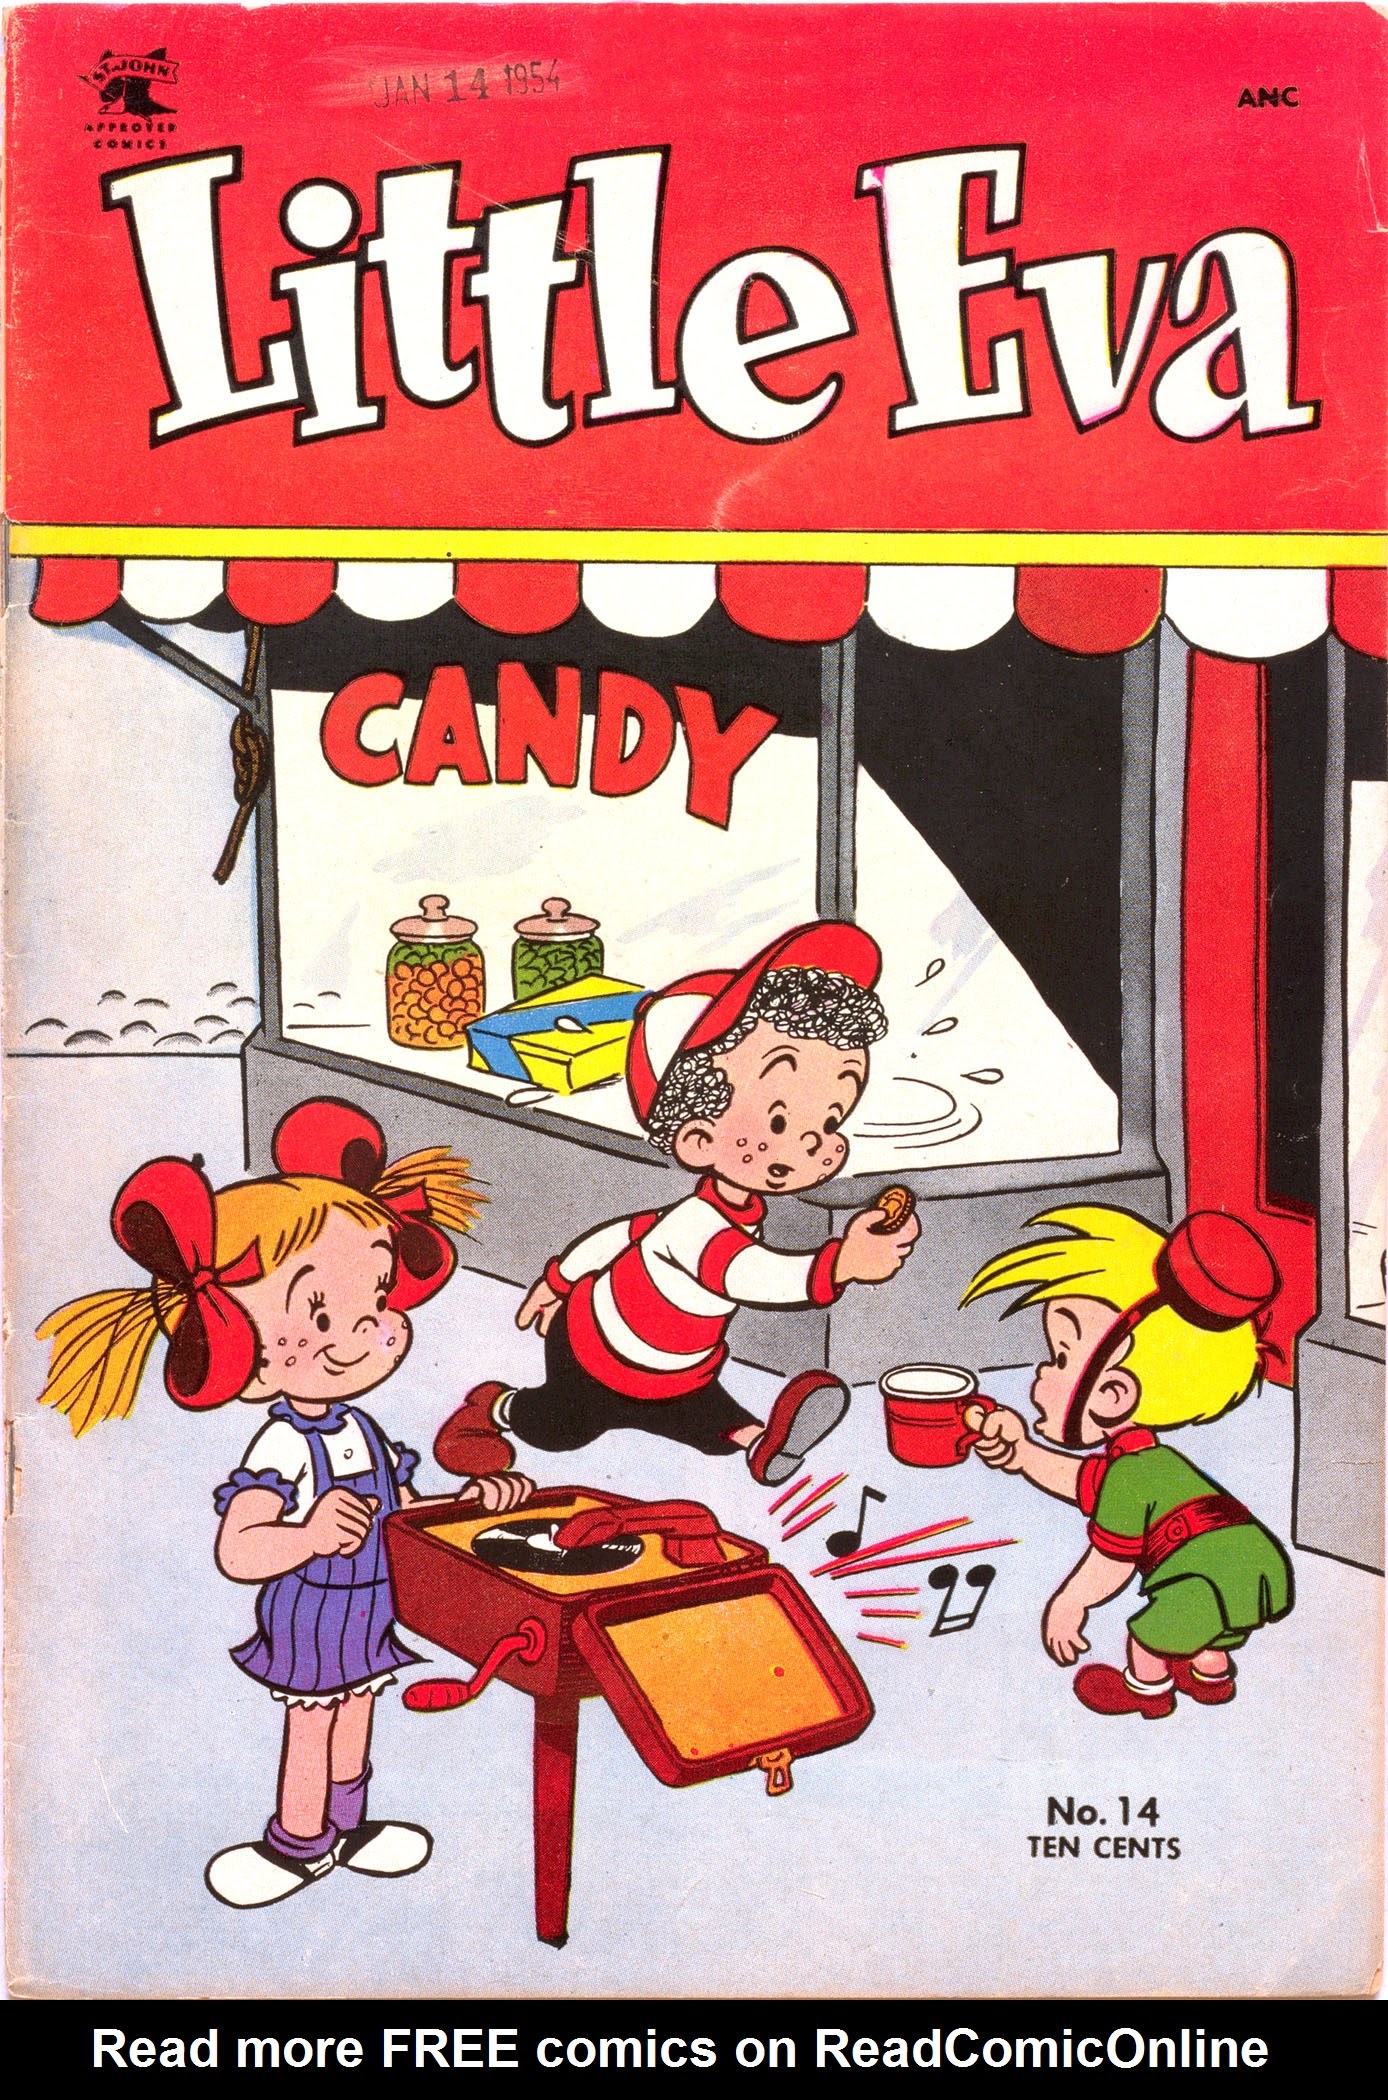 Little Eva Issue 14 | Read Little Eva Issue 14 comic online in high  quality. Read Full Comic online for free - Read comics online in high  quality .